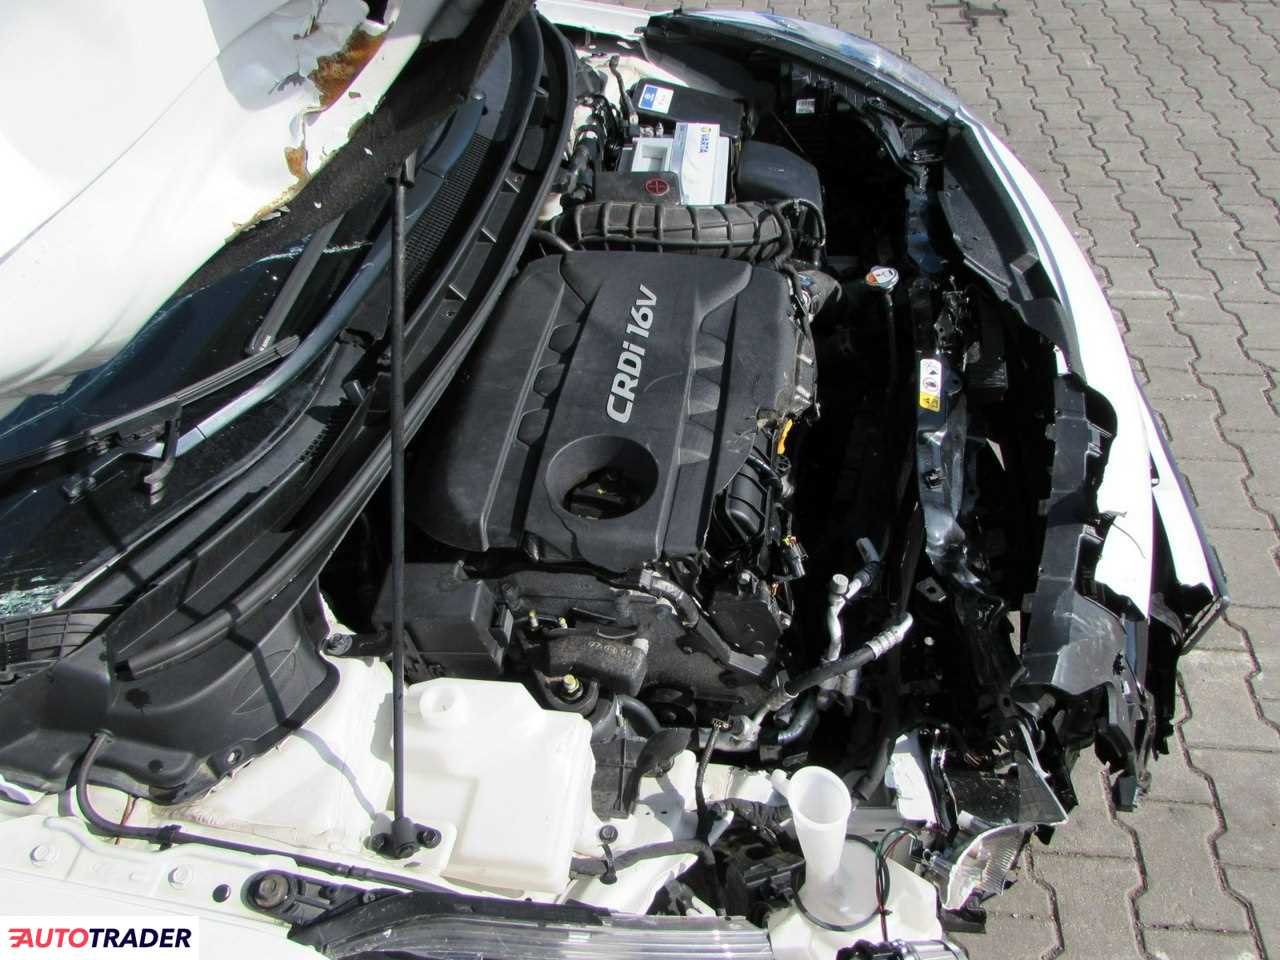 Hyundai i30 1.6 diesel 110 KM 2015r. (Gliwice) Autotrader.pl